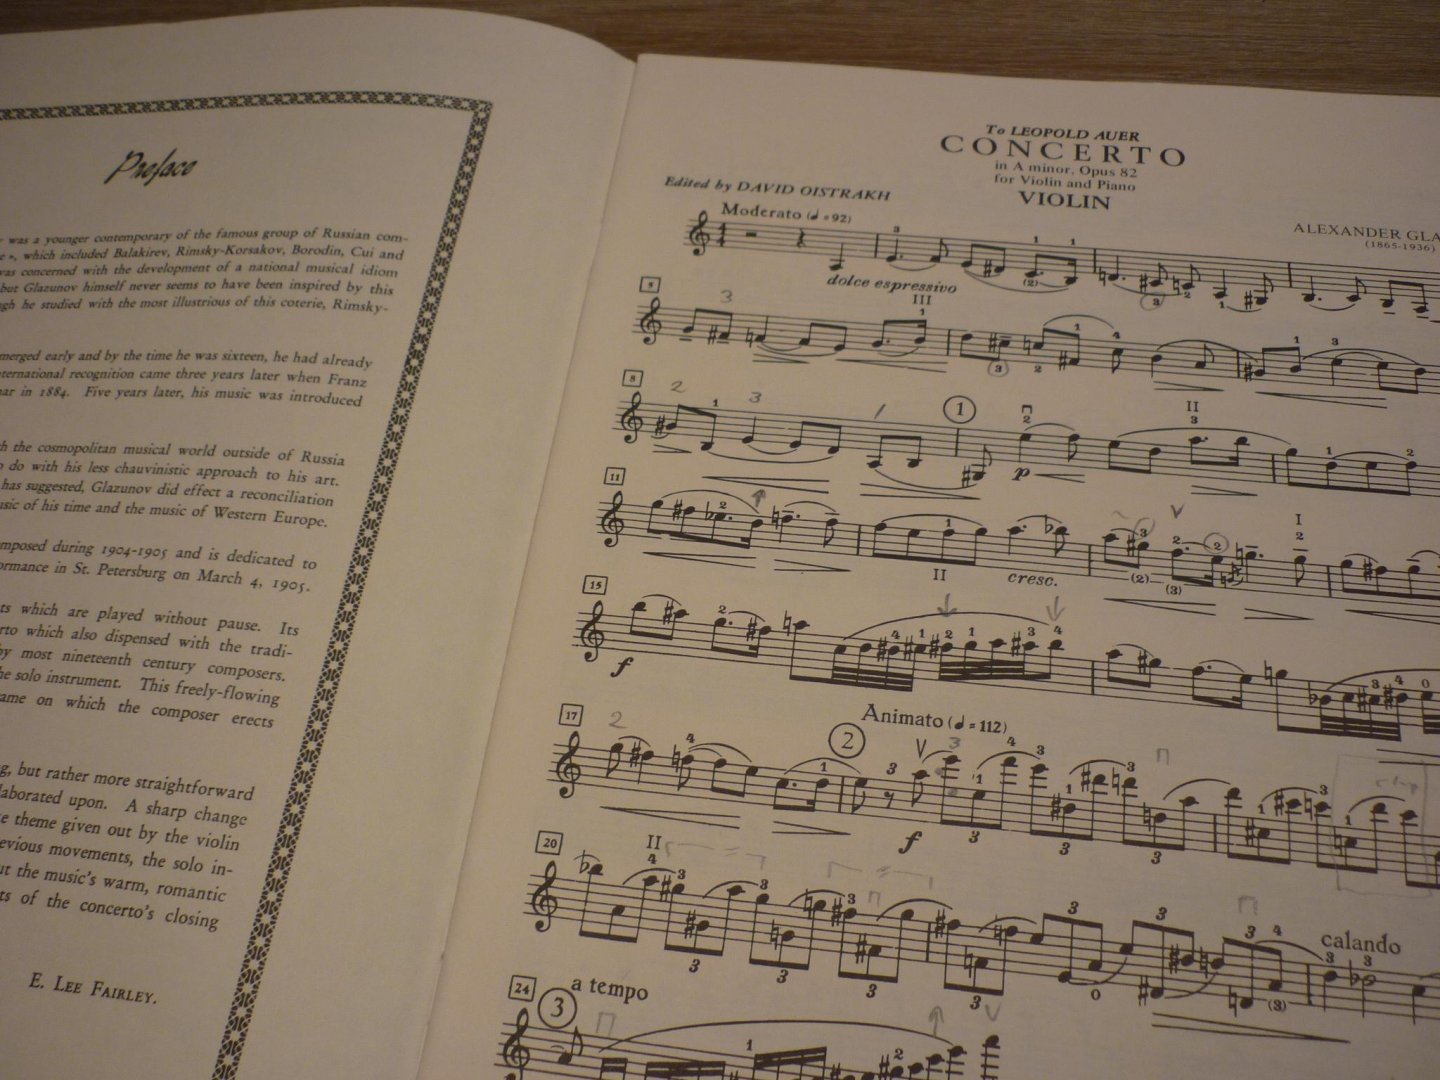 Glazunov; Alexander (1865-1936) - Concerto in A minor, Op. 82 for Violin and Piano (Edited by David Oistrakh)